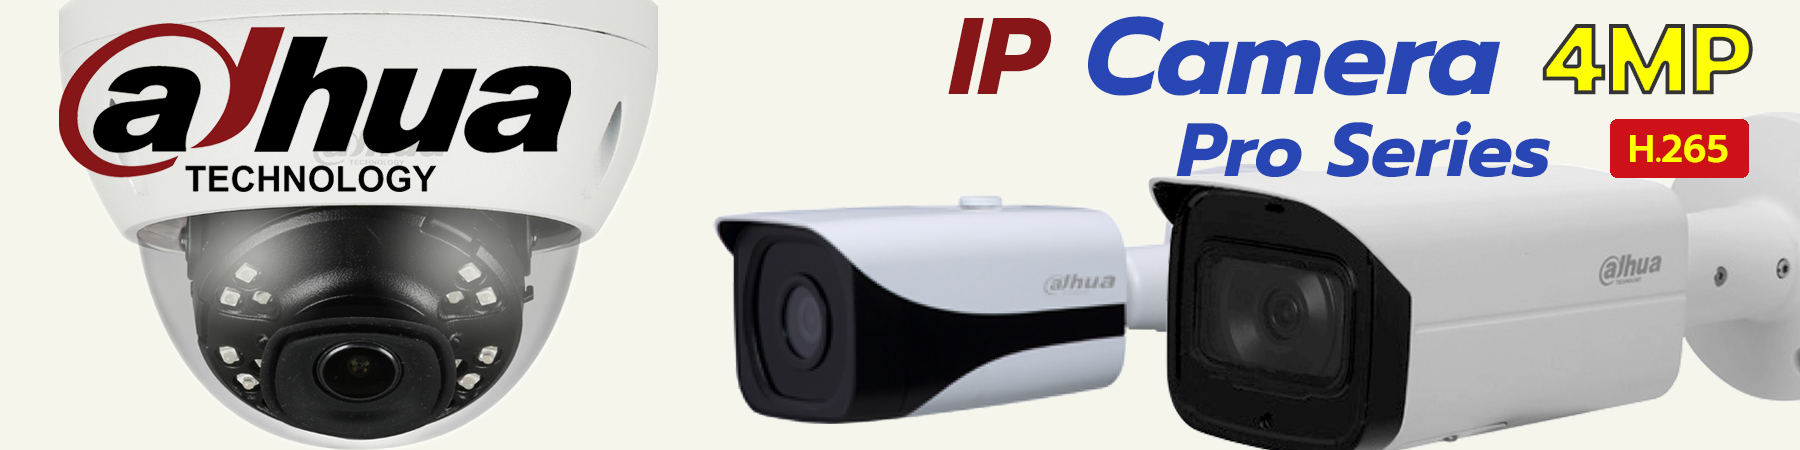 Dahua IP Camera Pro Series,Dahua Pro Series,Dahua IPC,Dahua IPC Pro Series 6MP,Dahua Built-in Mic,Dahua Network Camera